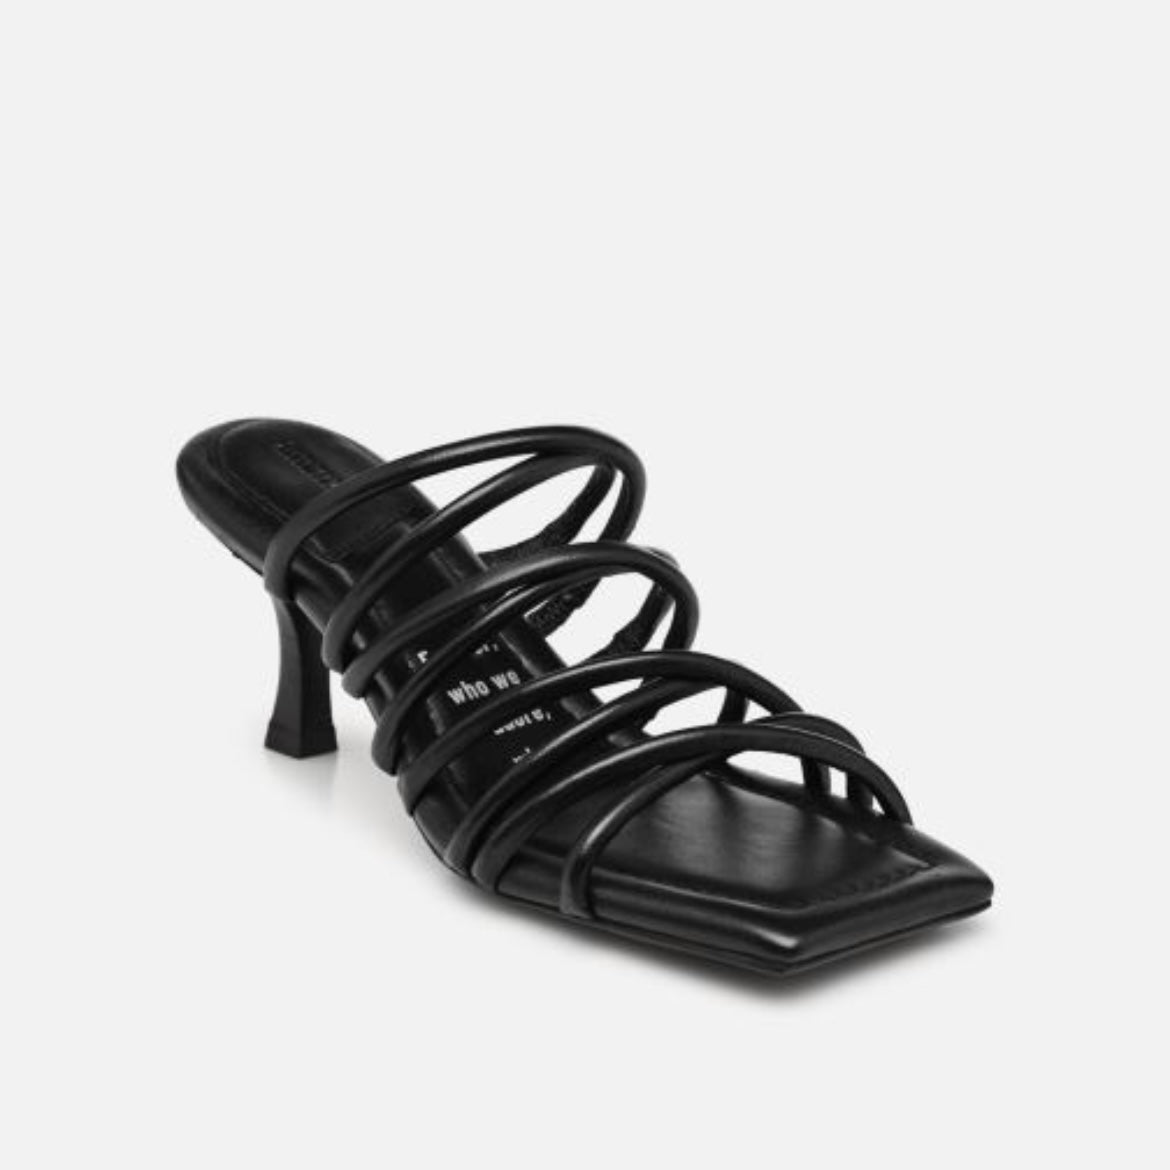 Bronx Sandal Oli-viah Black - Peet kleding